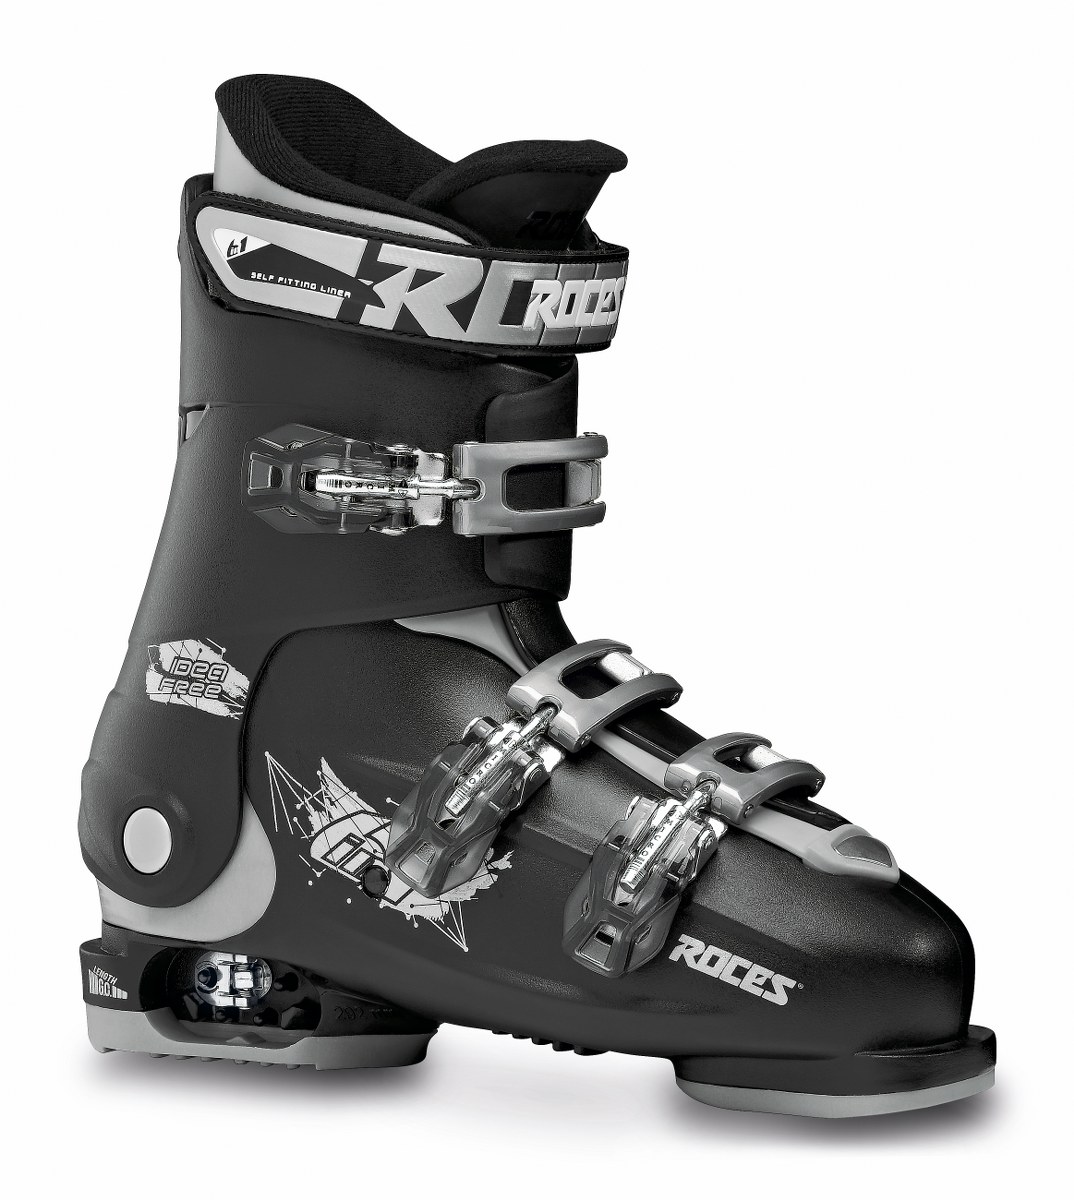 Outlook Destructief Zwerver Roces IDEA Free black silver verstelbare skischoenen 36-40 - Ski Outlet